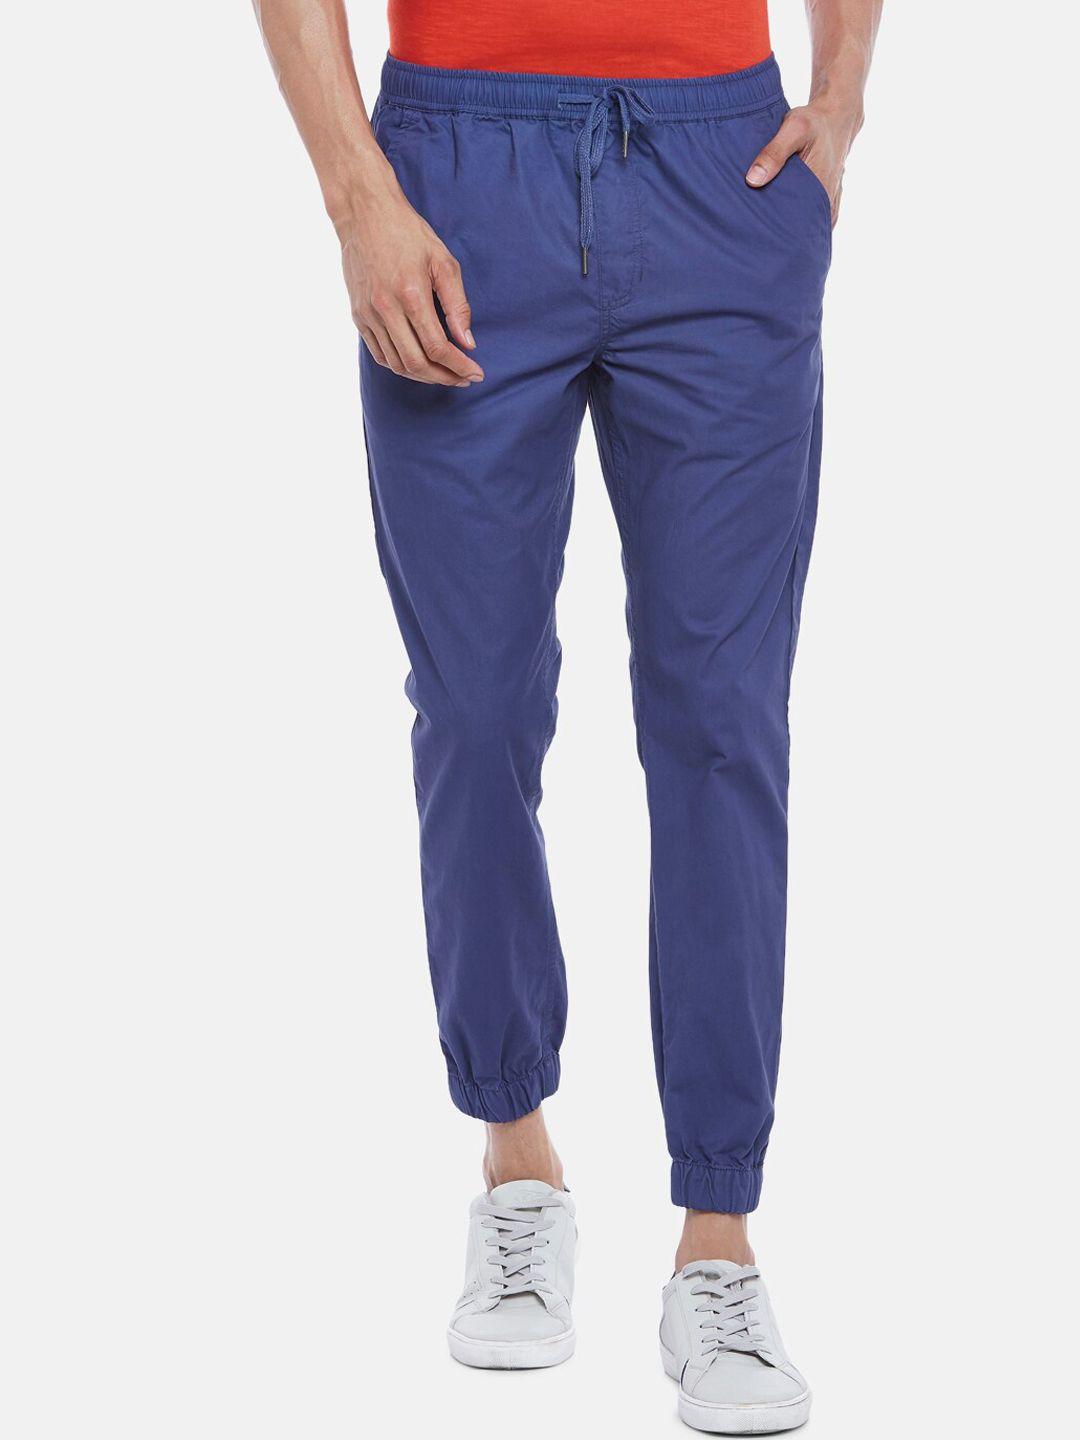 urban ranger by pantaloons men blue slim fit pure cotton joggers trousers